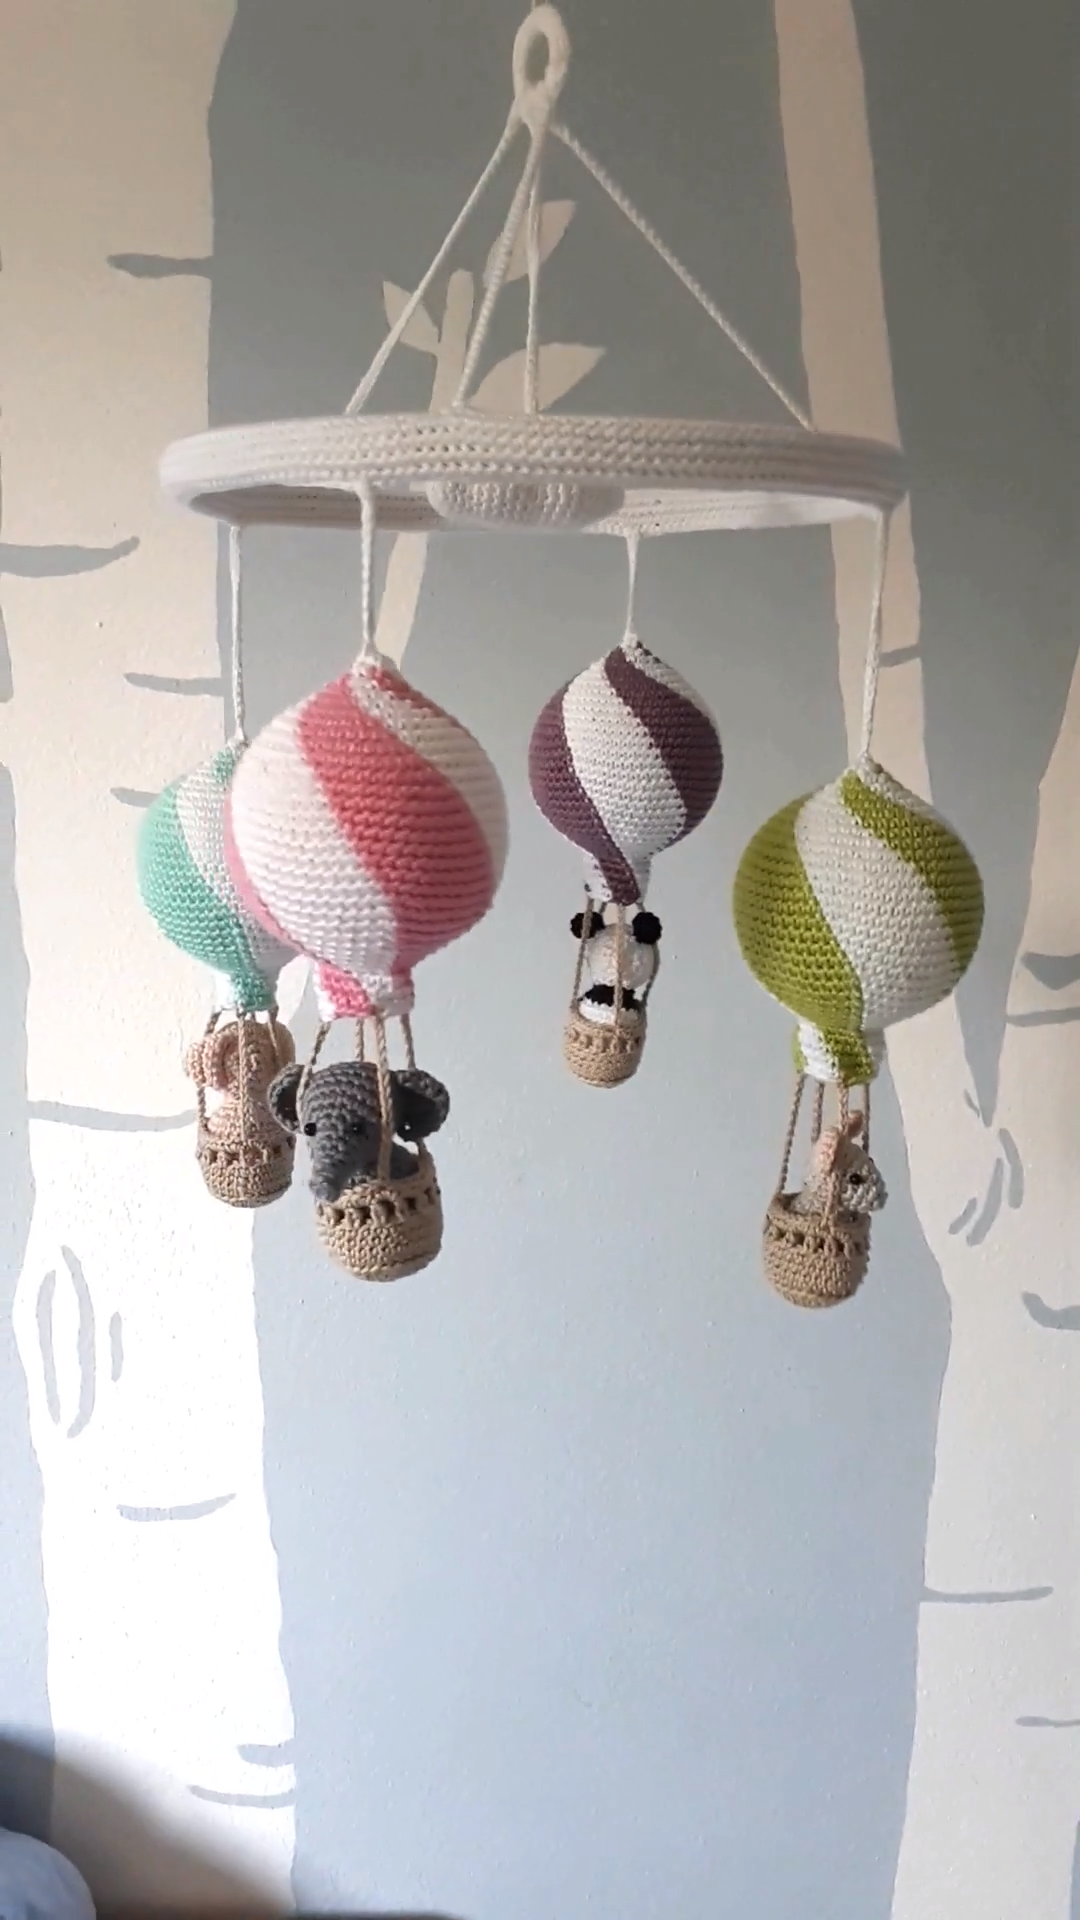 Crochet Hot Air Balloon Baby Mobile Pattern -   9 xmas fabric crafts Videos ideas